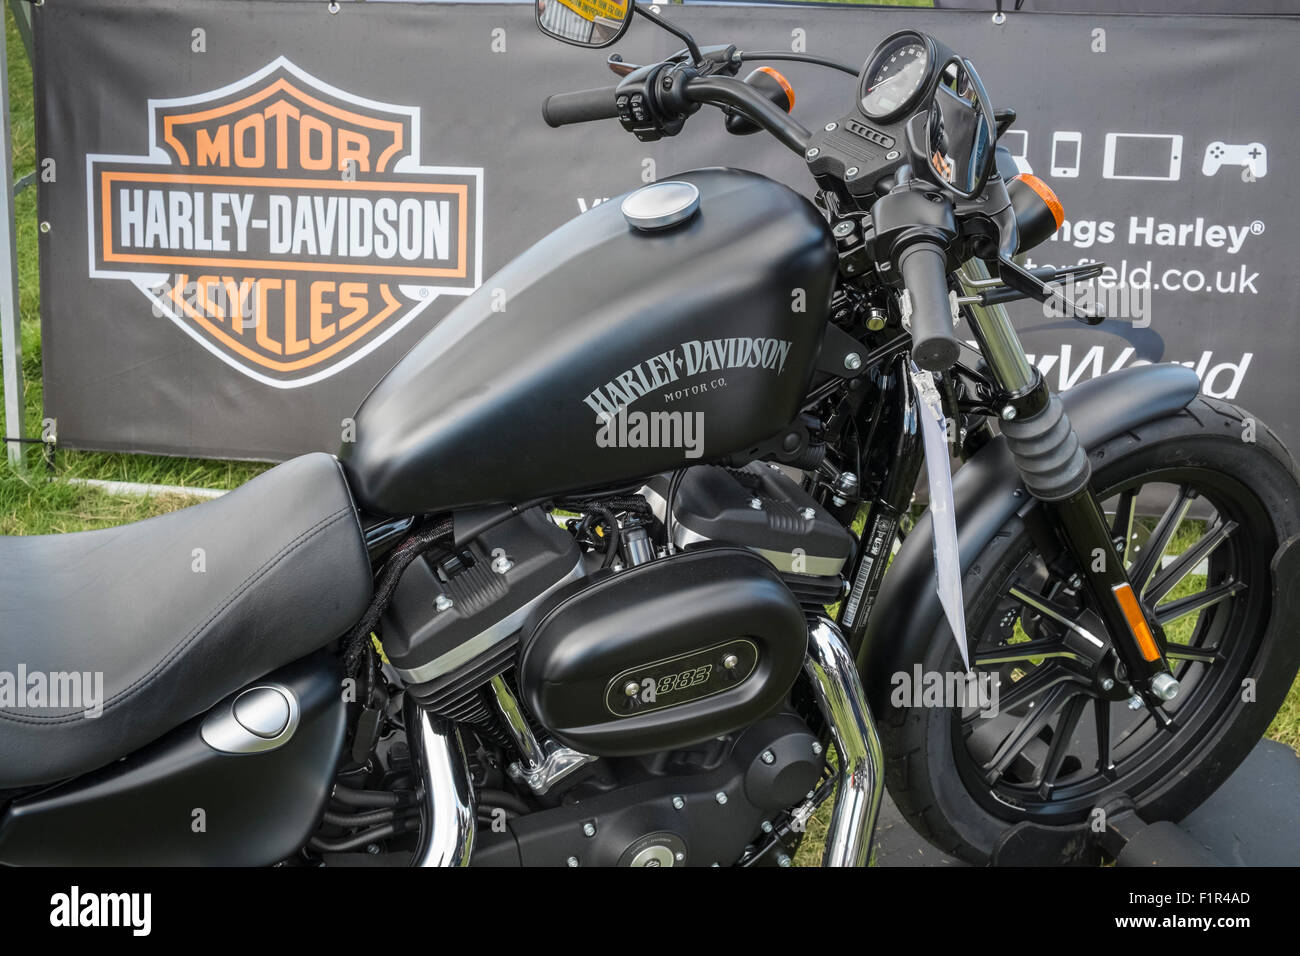 Nuovo Harley-Davidson motociclo sul display. Foto Stock